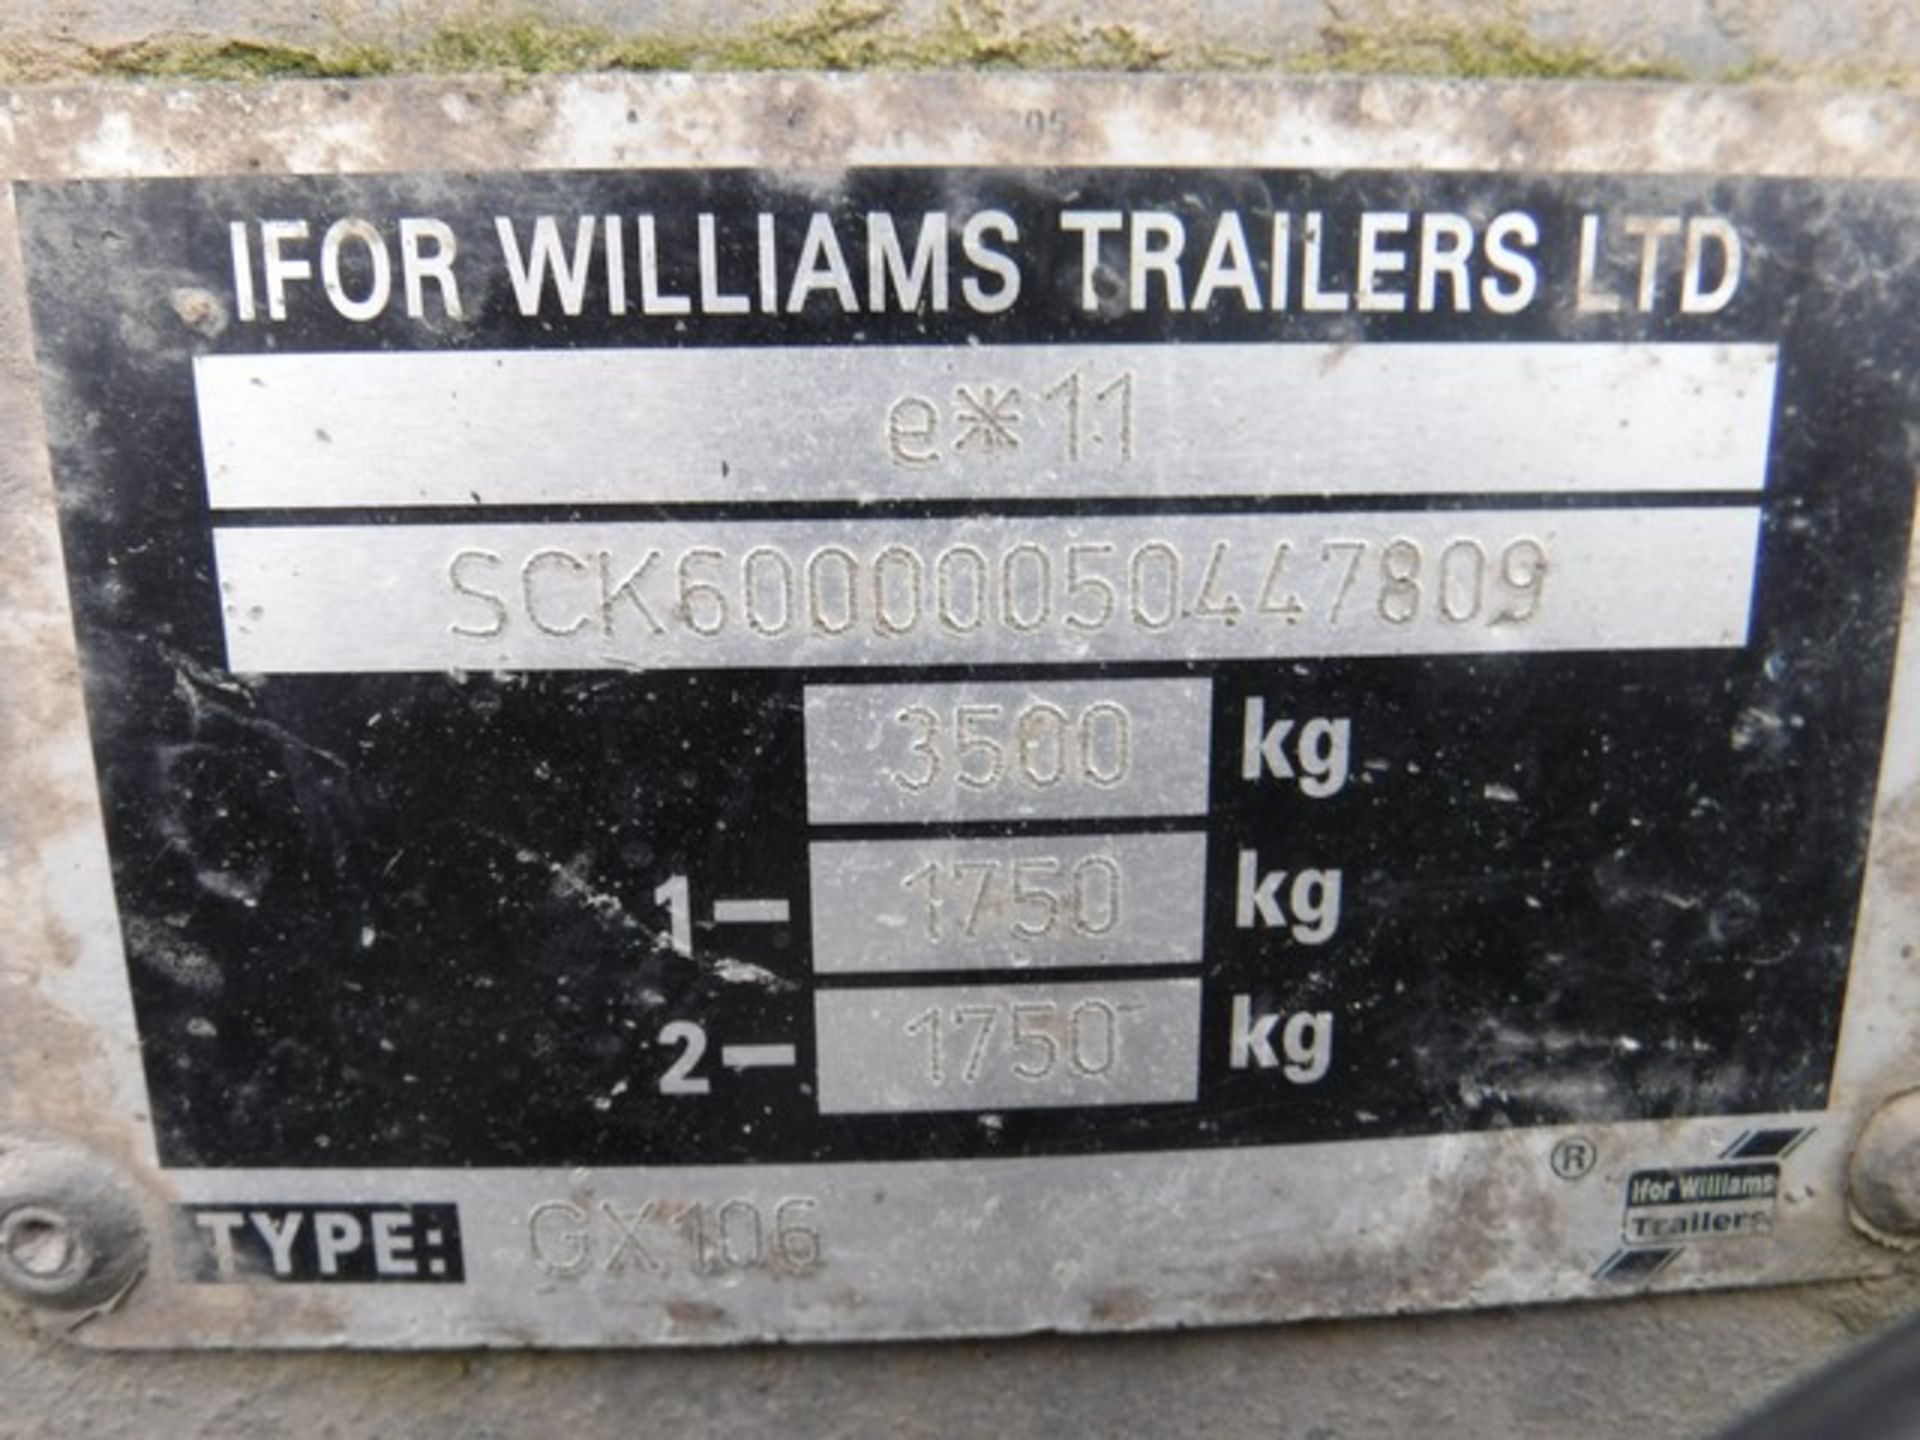 IFOR WILLIAMS 6' x 10' plant trailer GVW 3500kg s/n SCK60000050447809 - Bild 4 aus 4